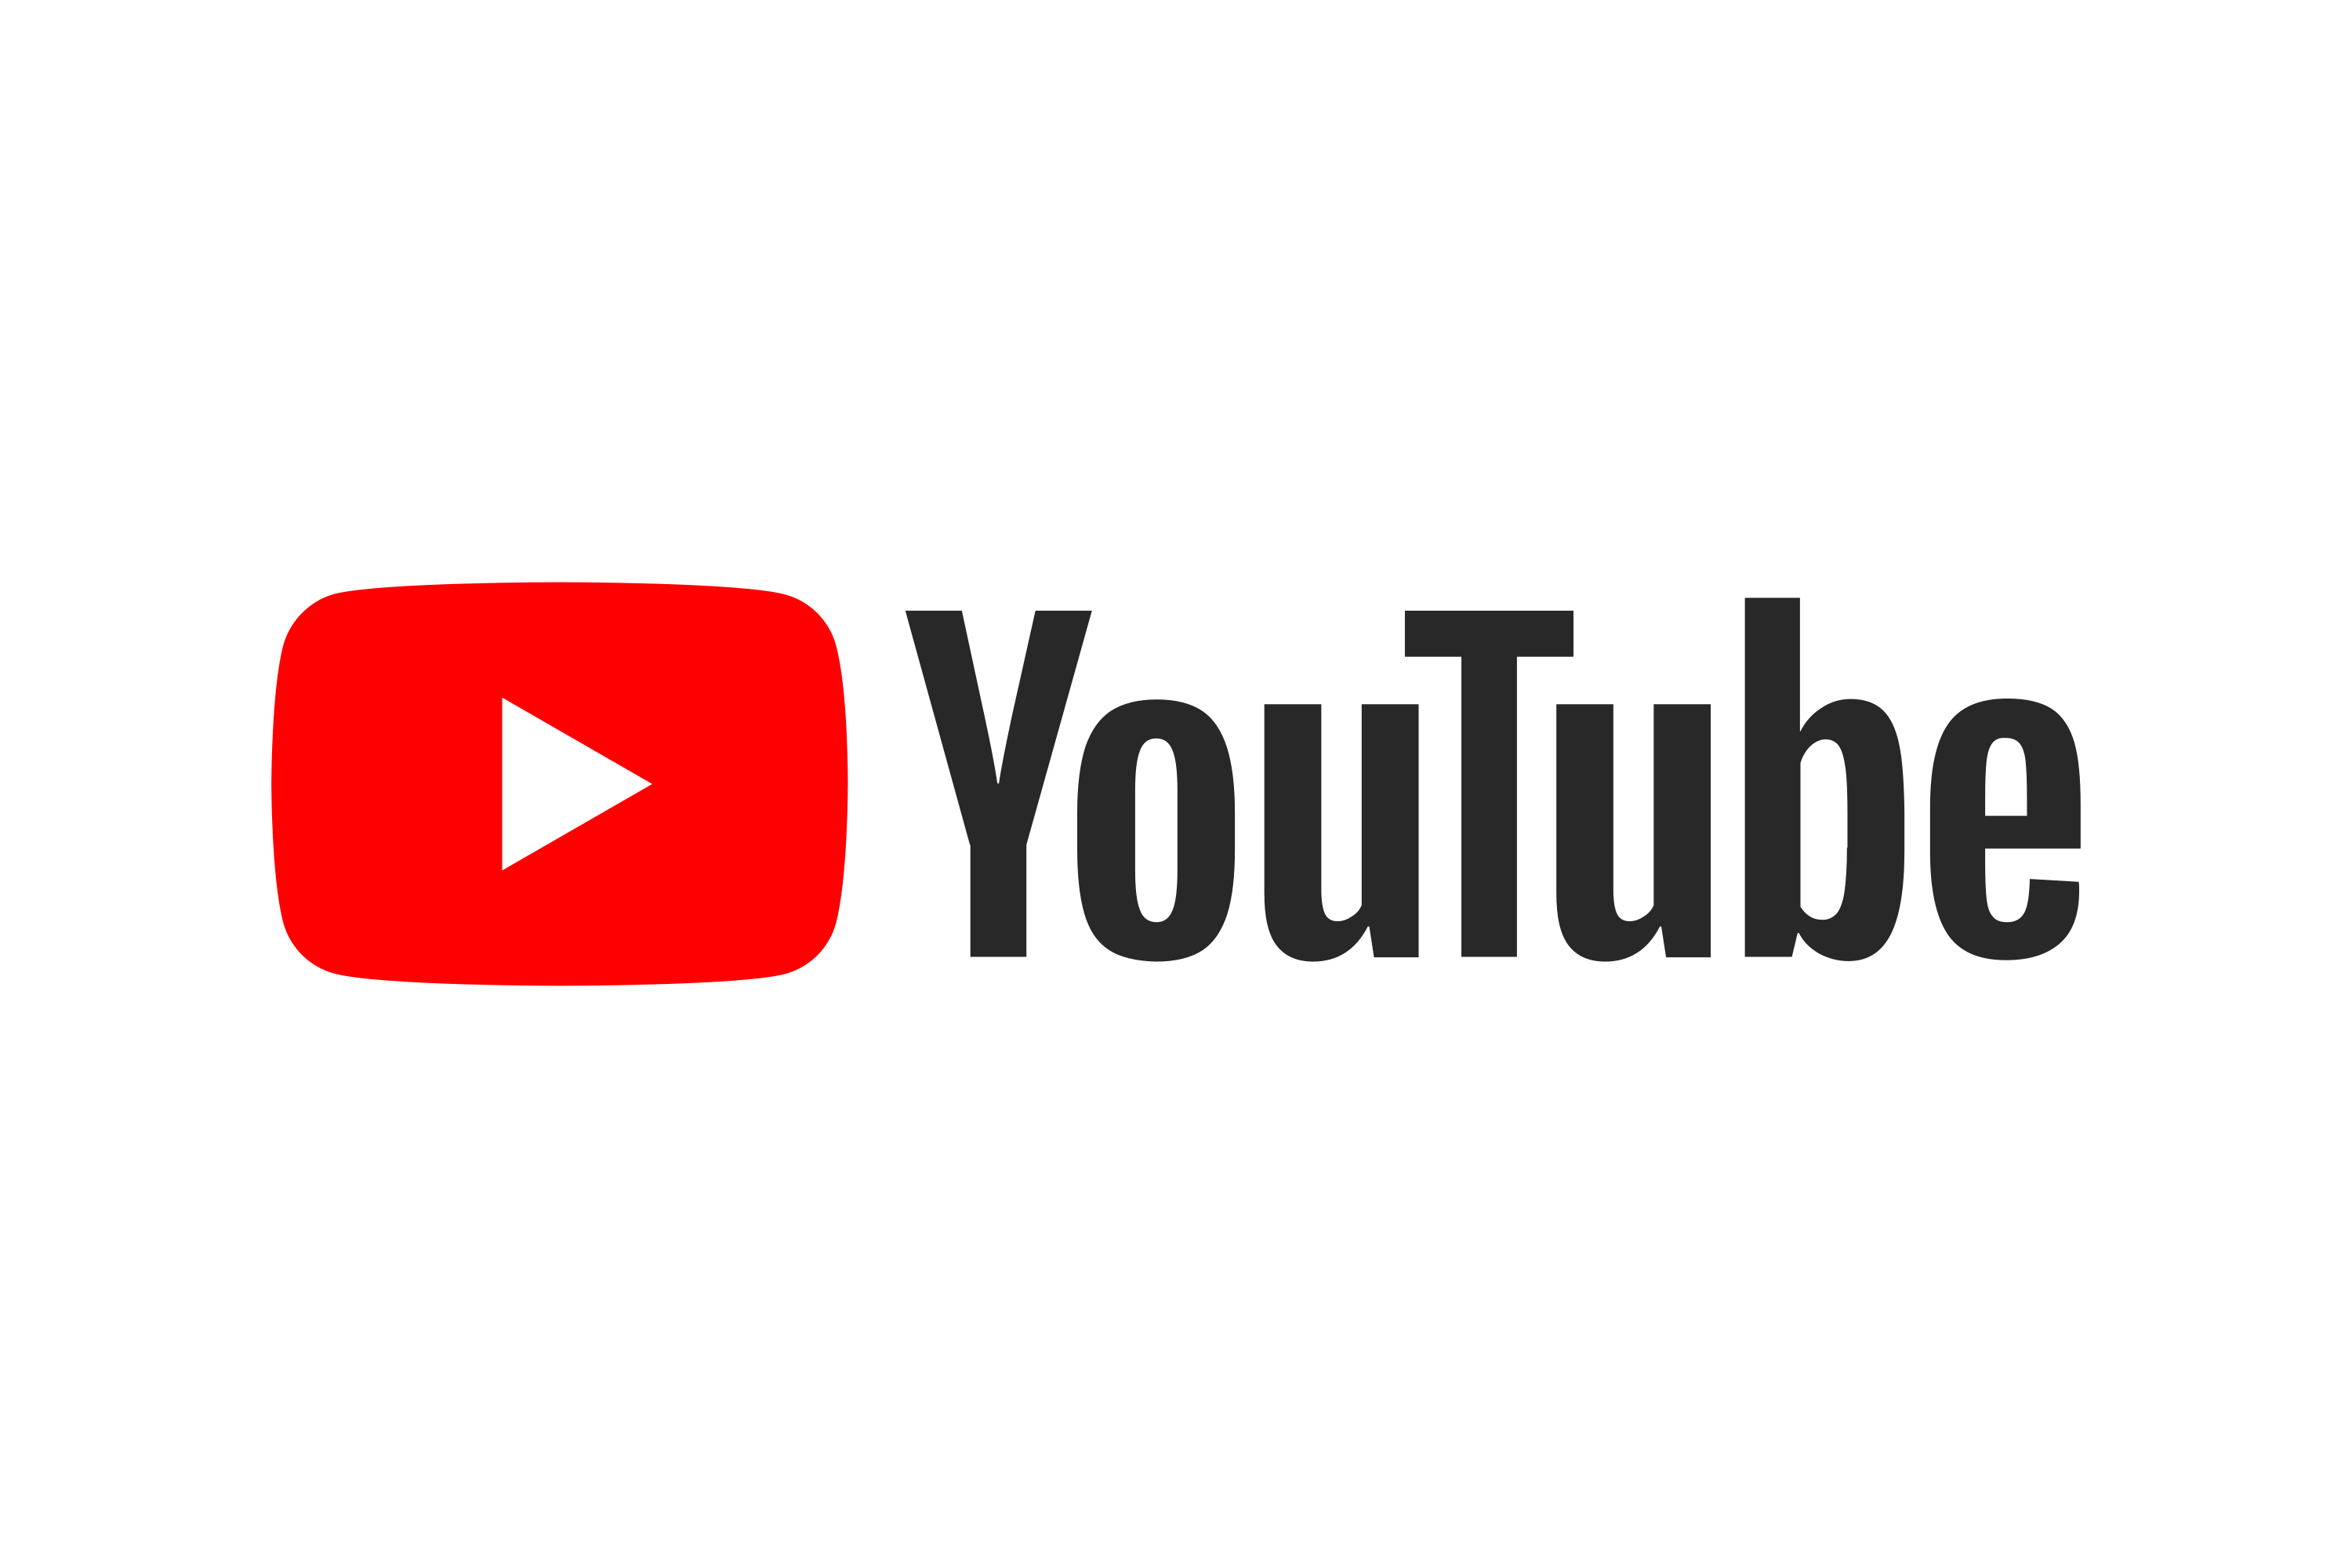 Youtube logo2